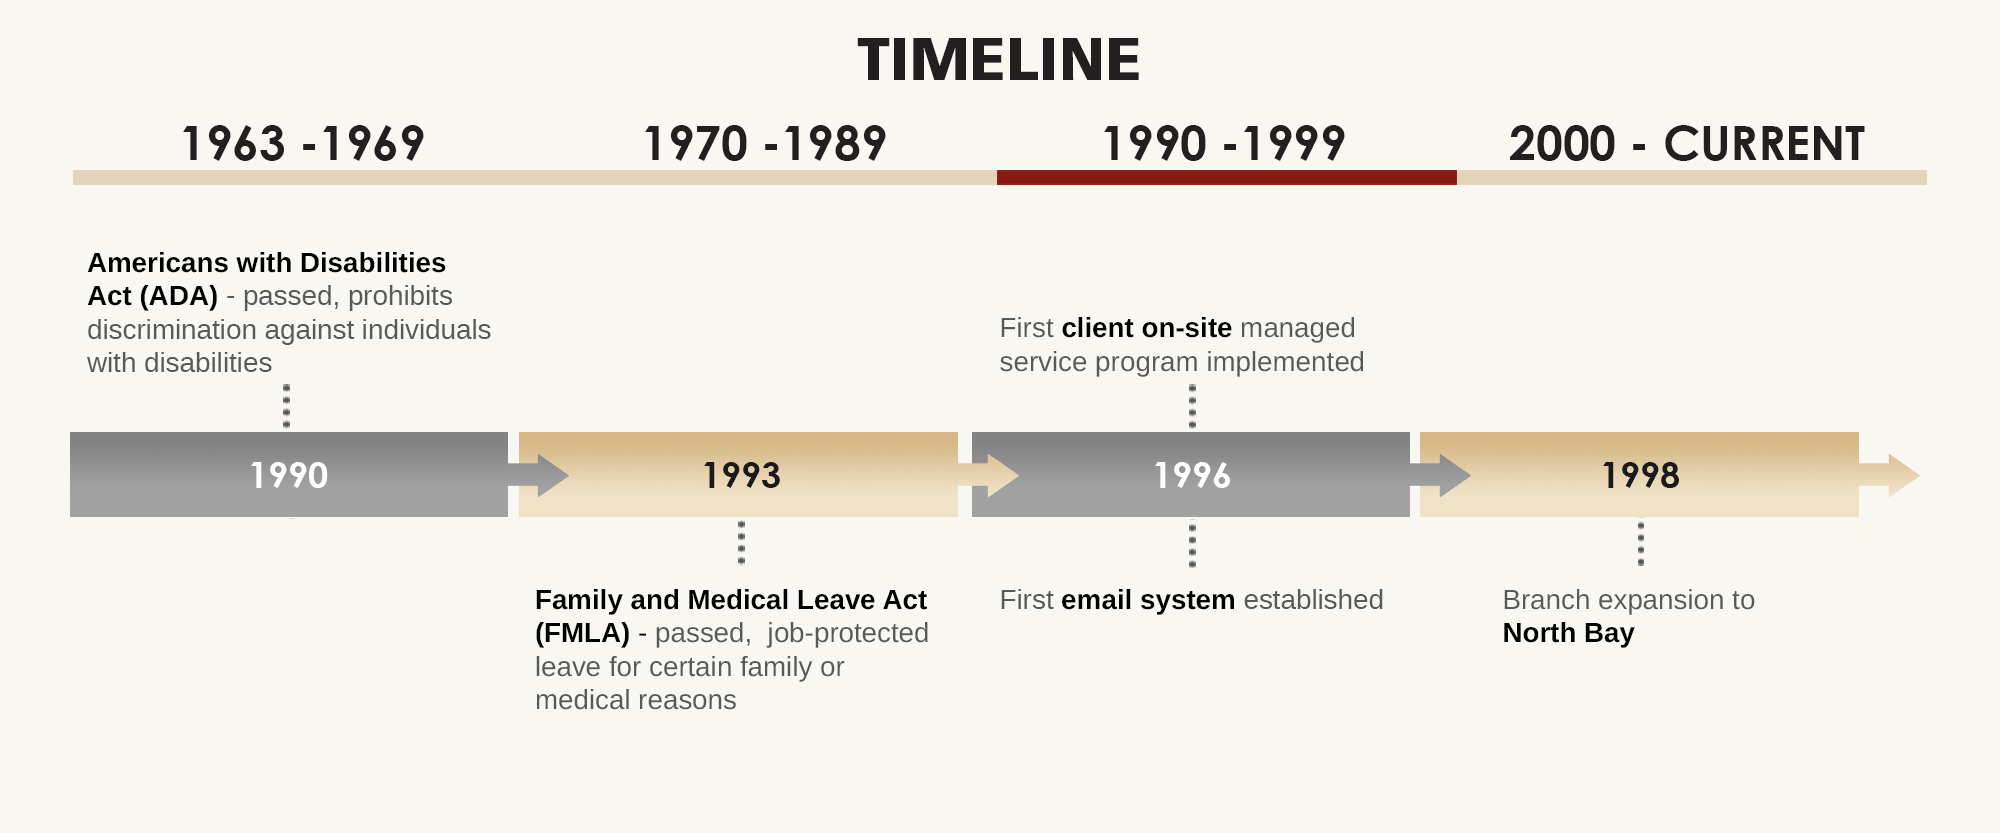 Certified Timeline 1990-2009